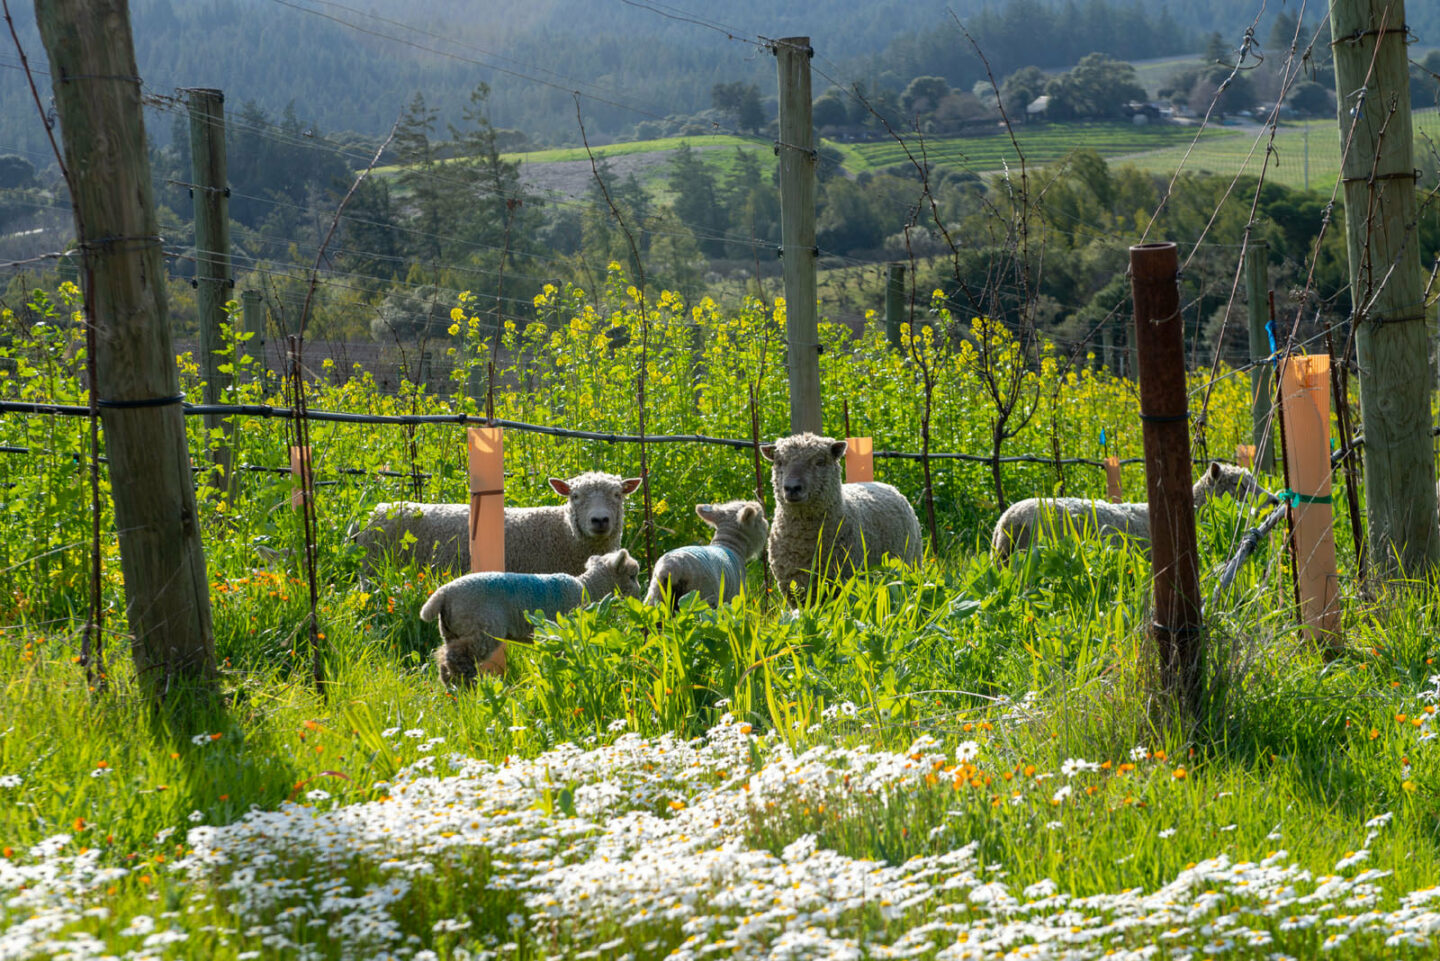 Sheep in a vineyard